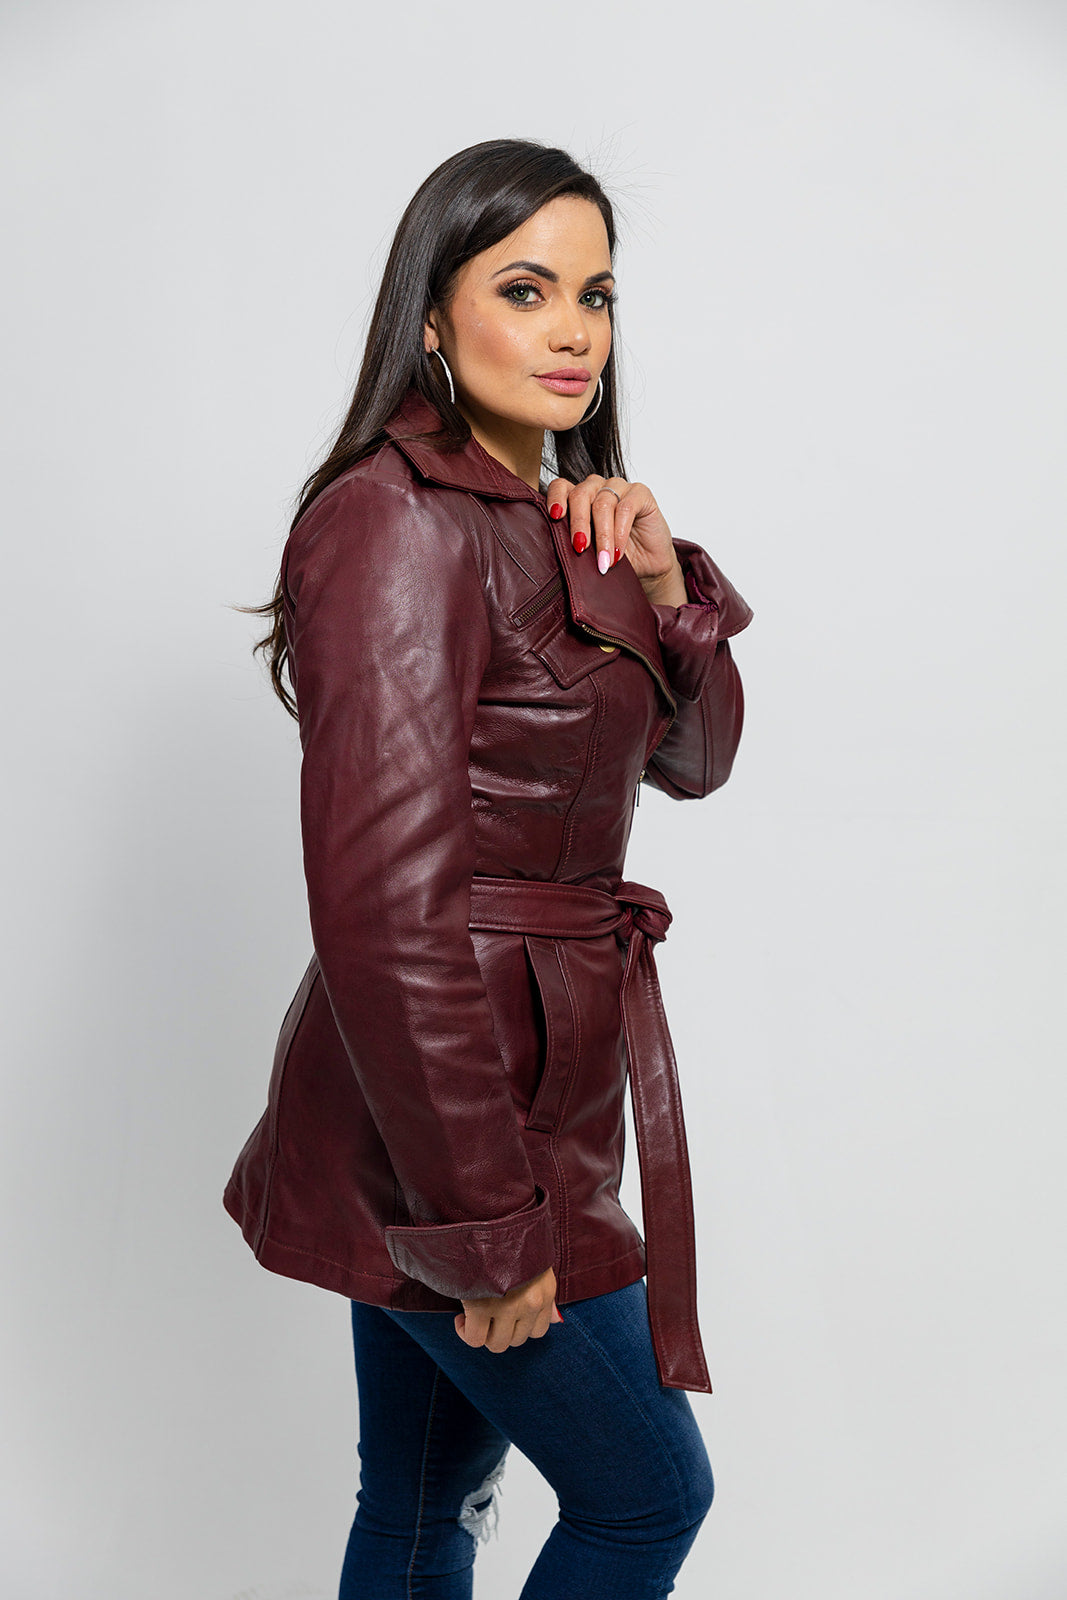 Traci Womens Leather Jacket Oxblood Women's Leather Jacket Whet Blu NYC   